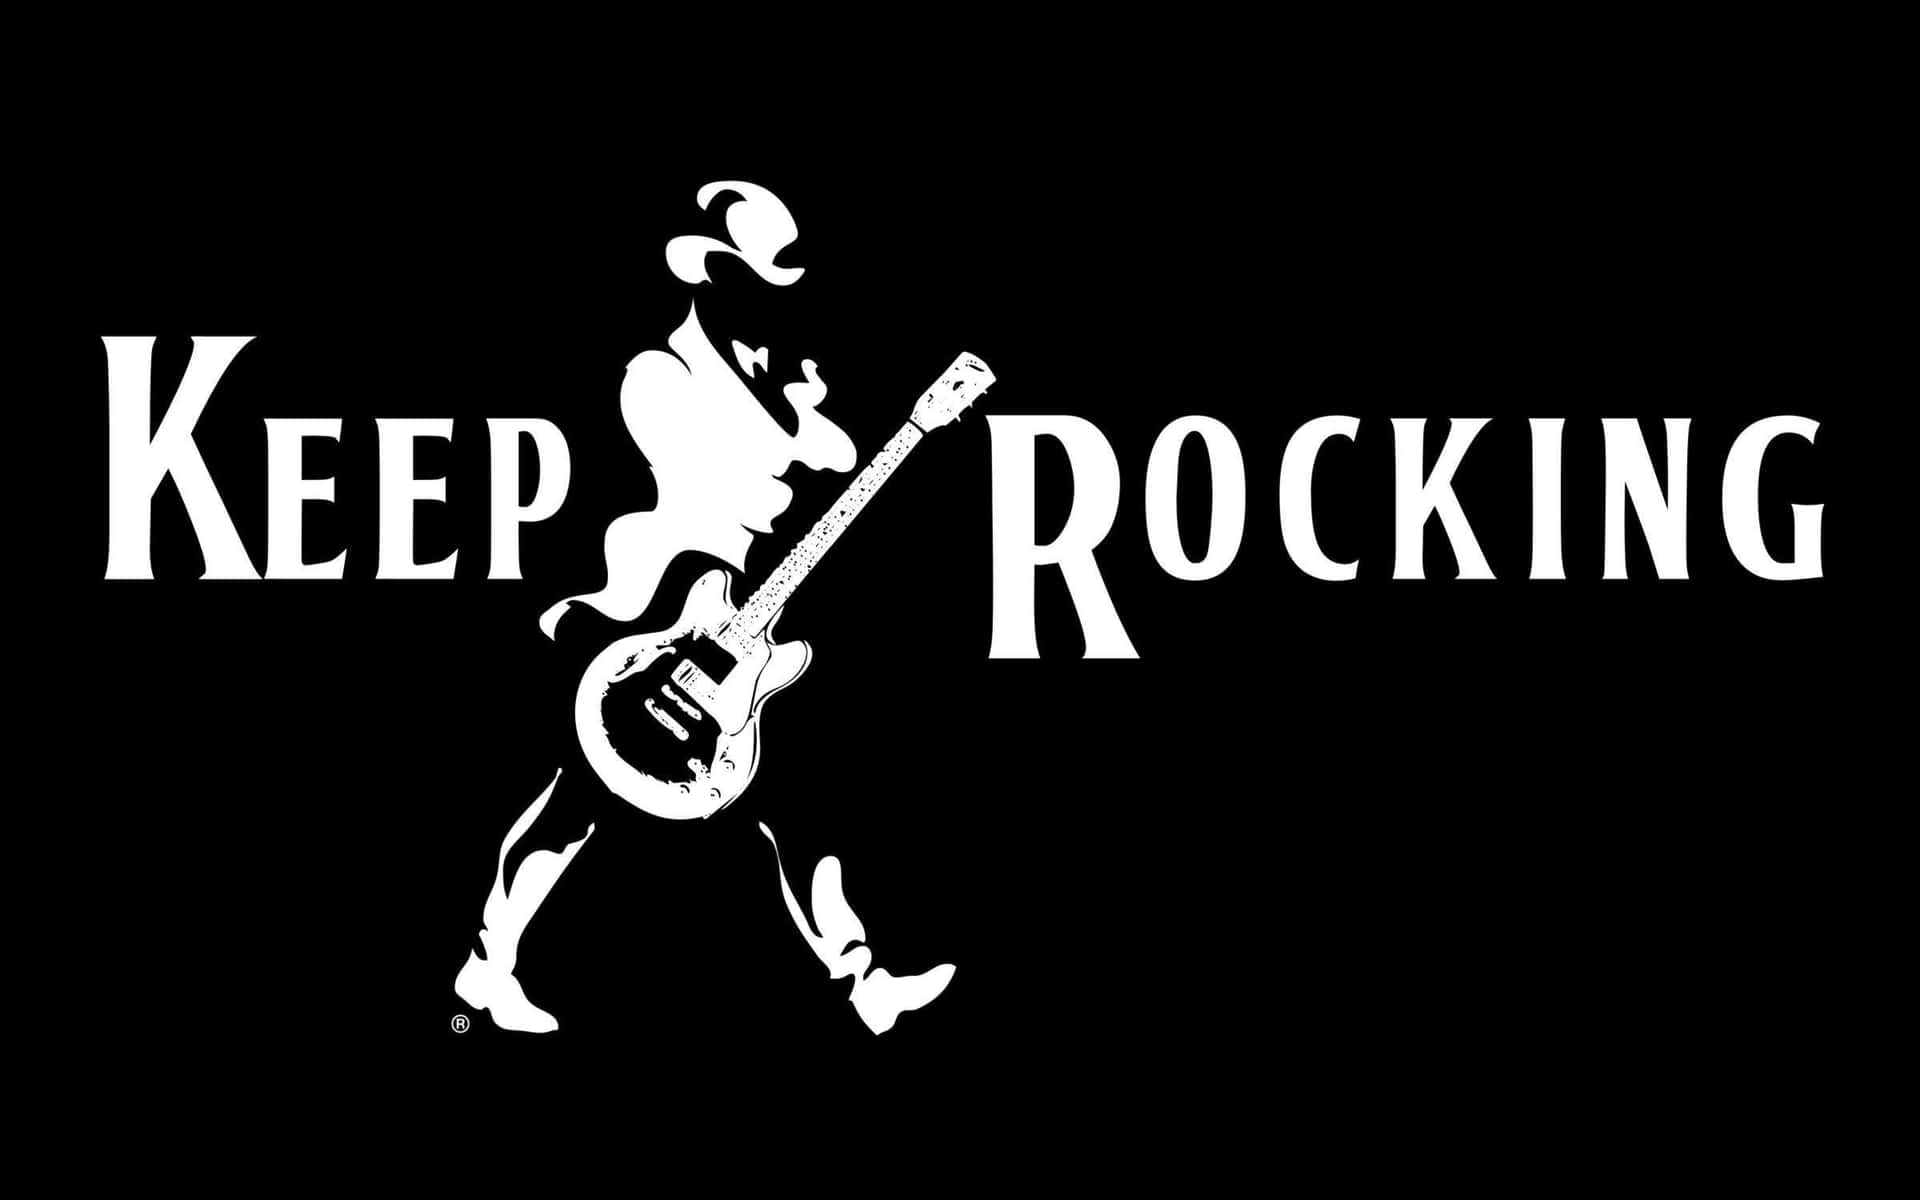 Keep Rocking Motivational Guitarist Graphic Wallpaper